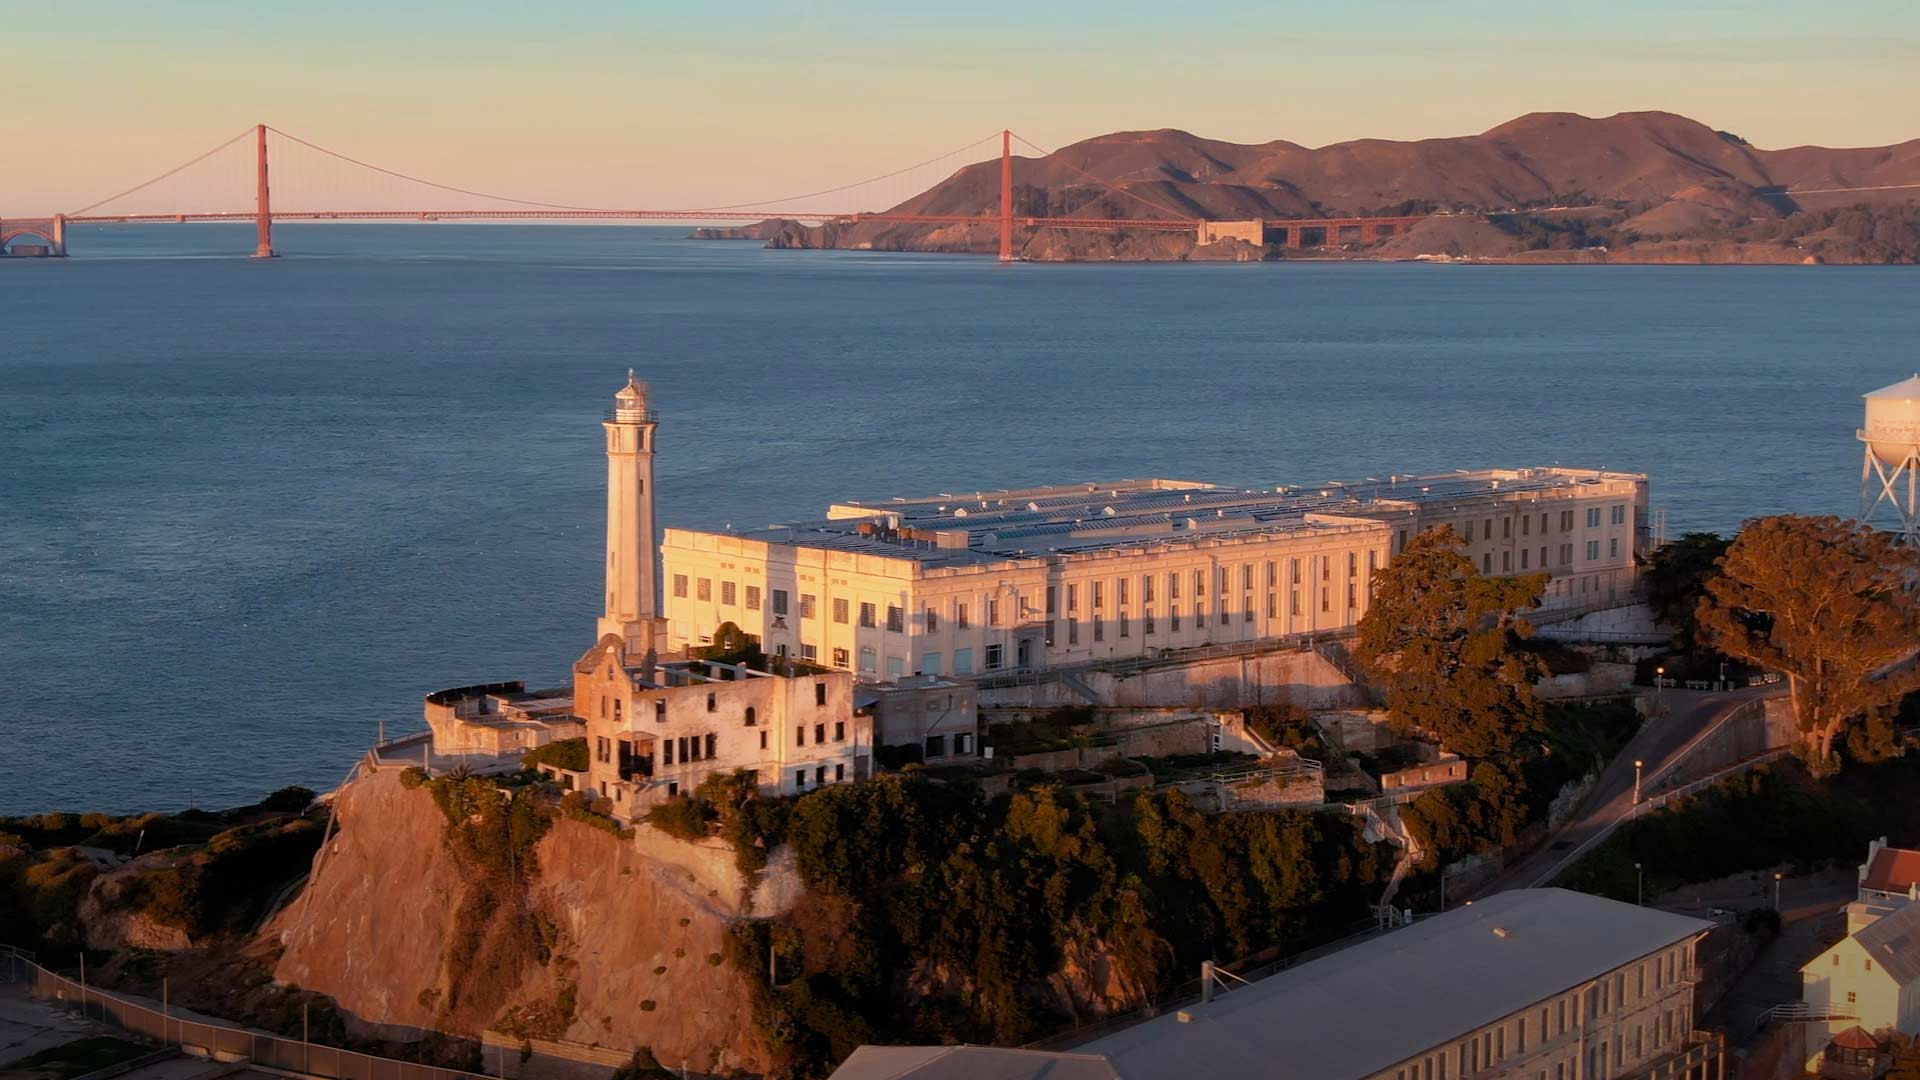 L'île d'Alcatraz vue du ciel